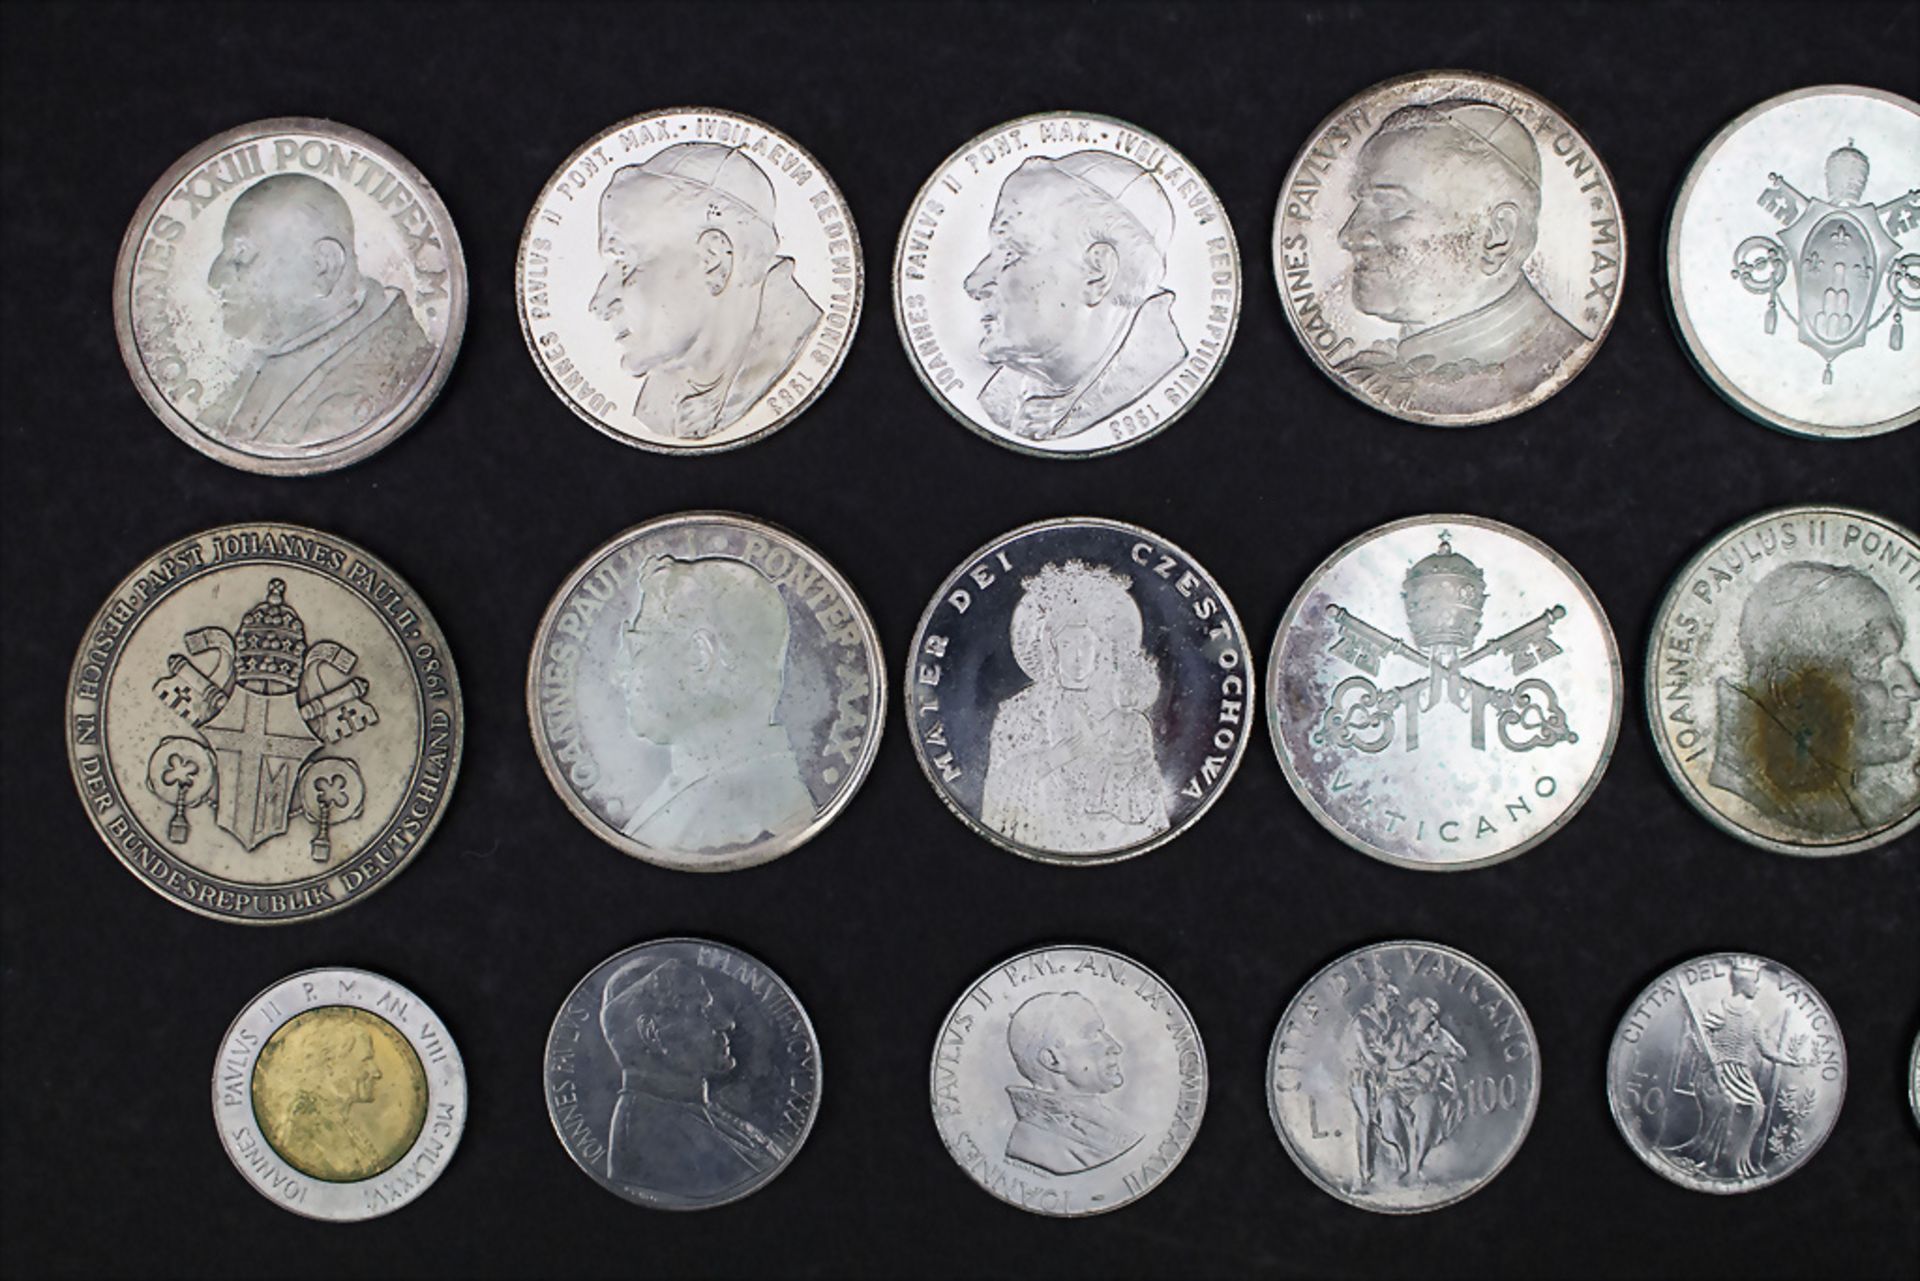 Sammlung Münzen und Medaillen des Vatikan / A collection of Vatican coins and medals - Image 7 of 10